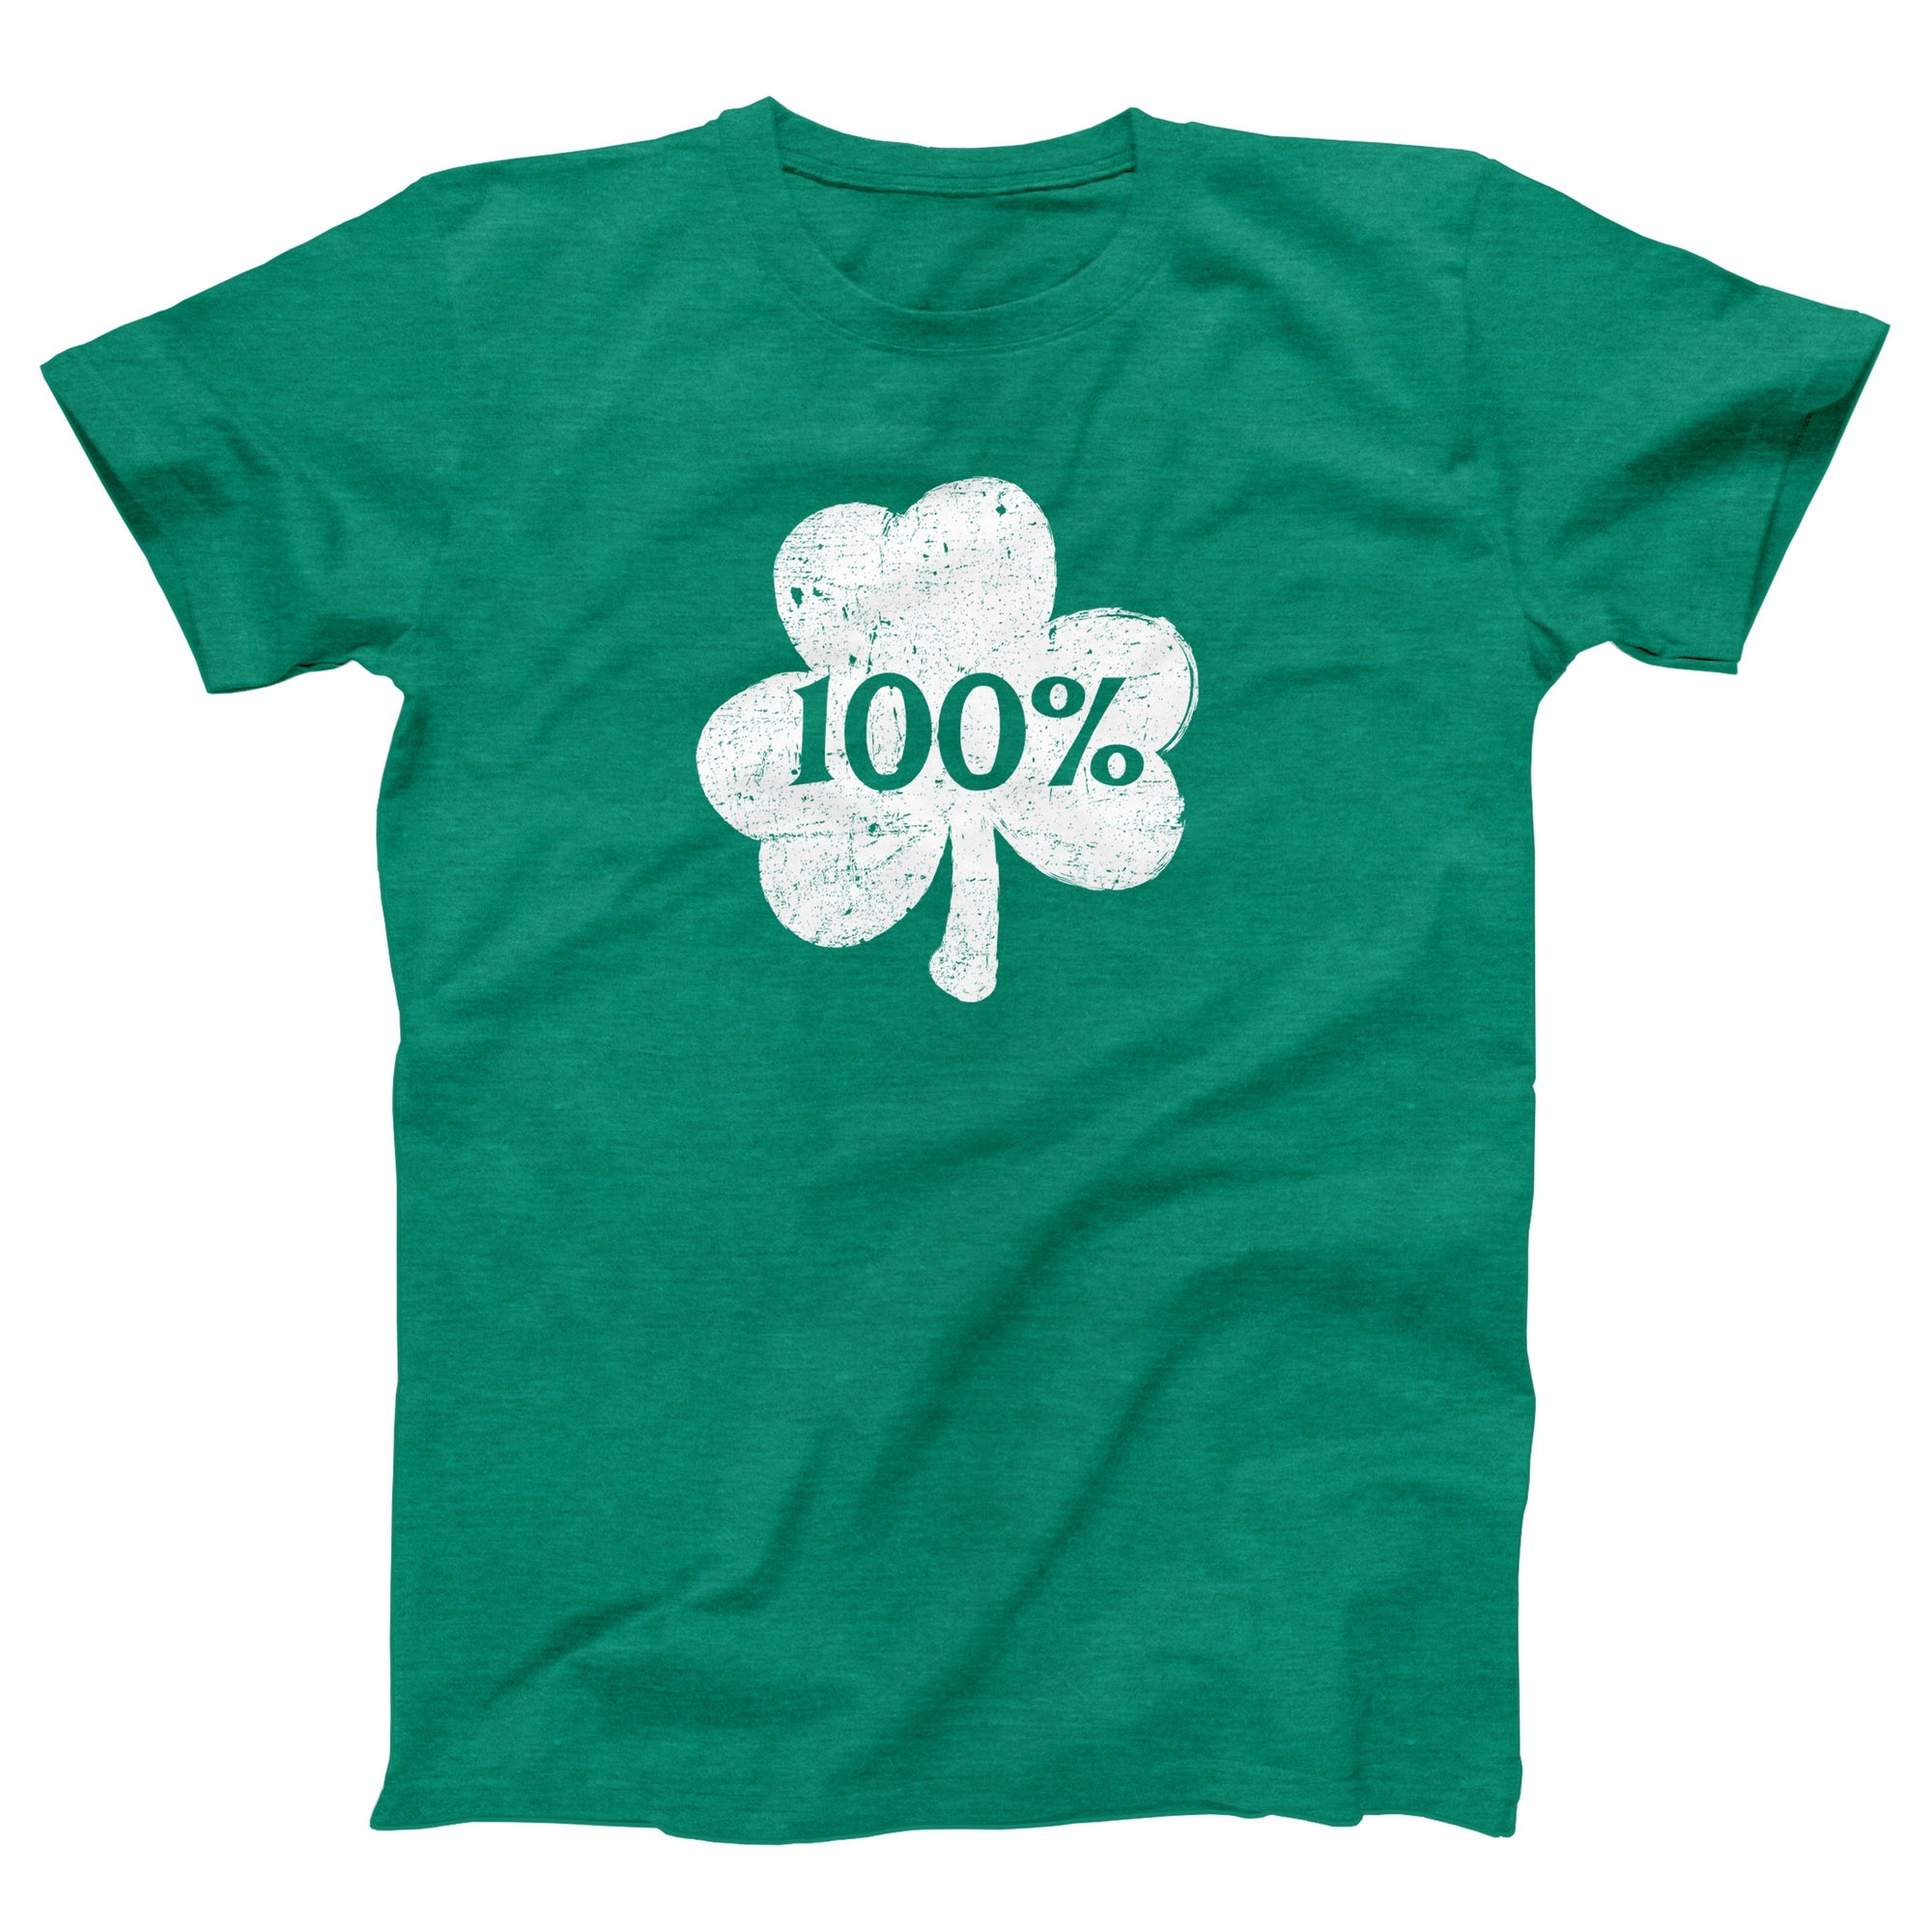 100% Irish Adult Unisex T-Shirt - Twisted Gorilla